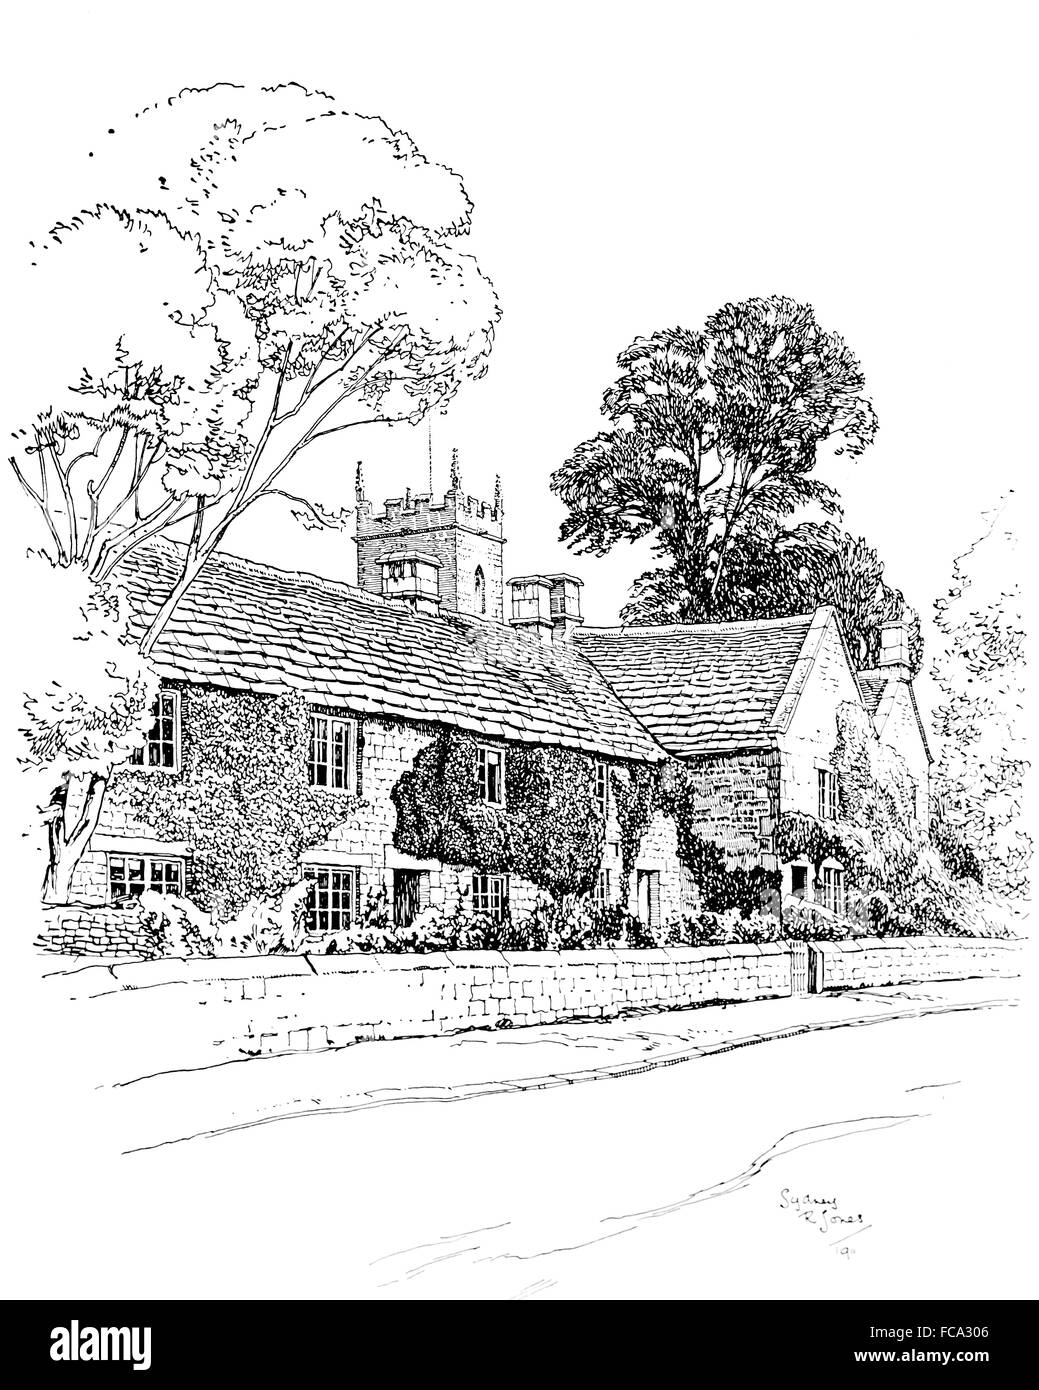 UK, England, Derbyshire, Eyam, Plague Cottages, Church, Street in1911, line illustration by, Sydney R Jones Stock Photo